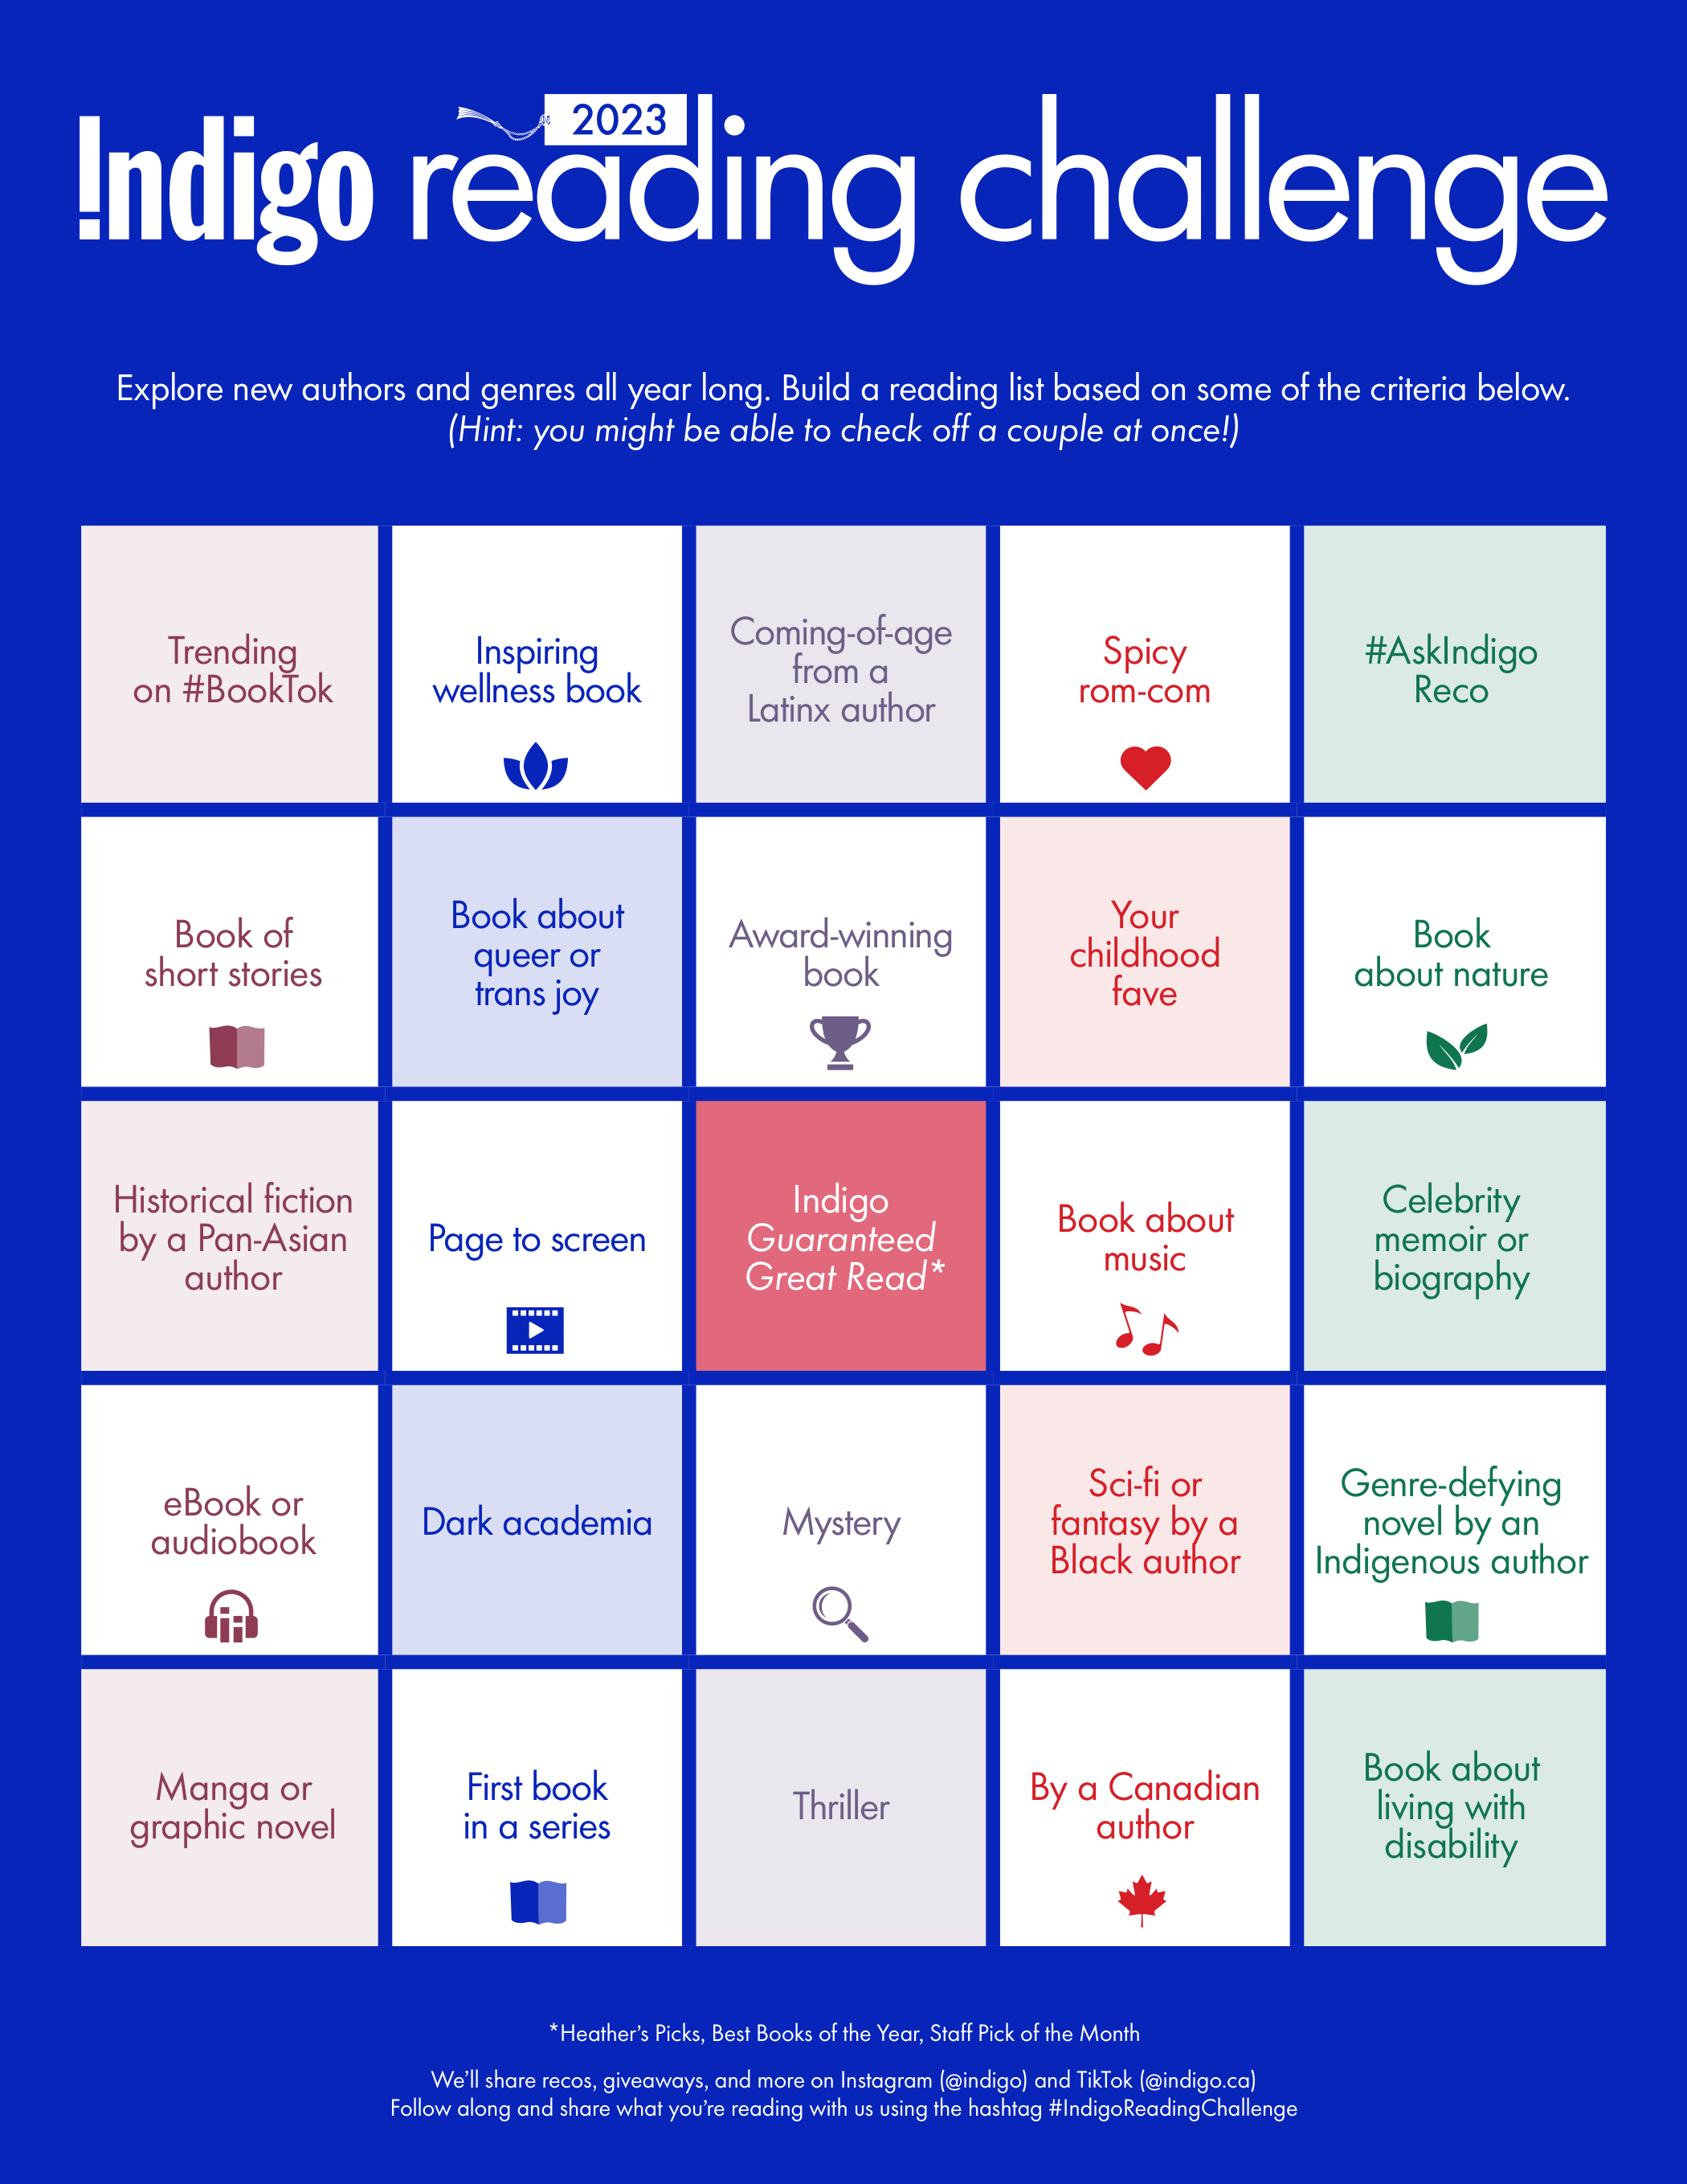 View the Indigo Reading Challenge Bingo card